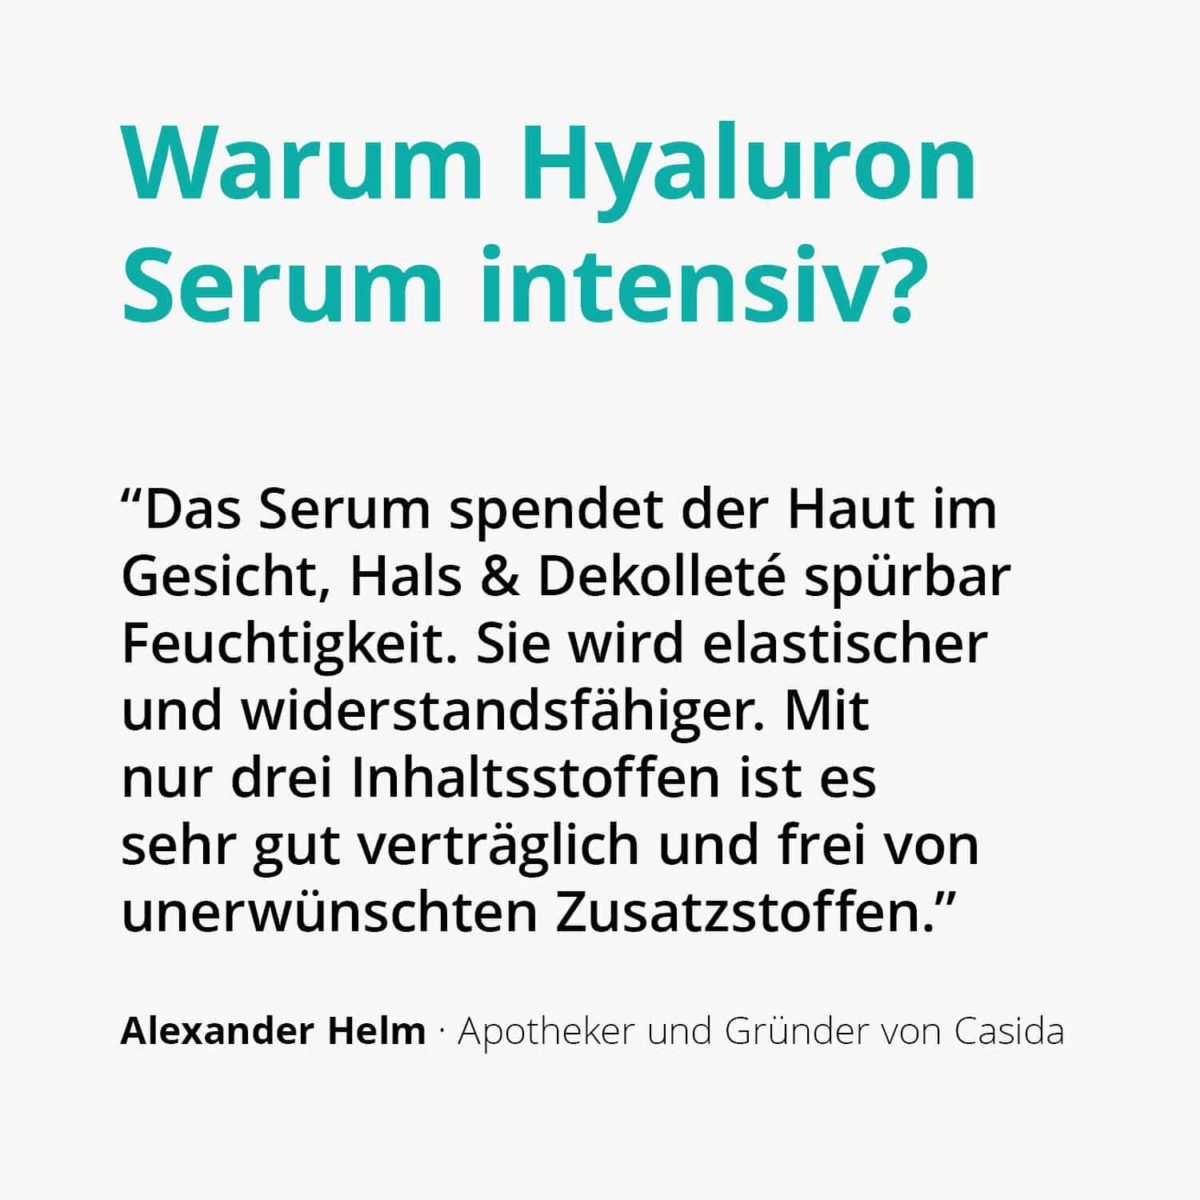 Hyaluronic Acid Serum Intensive